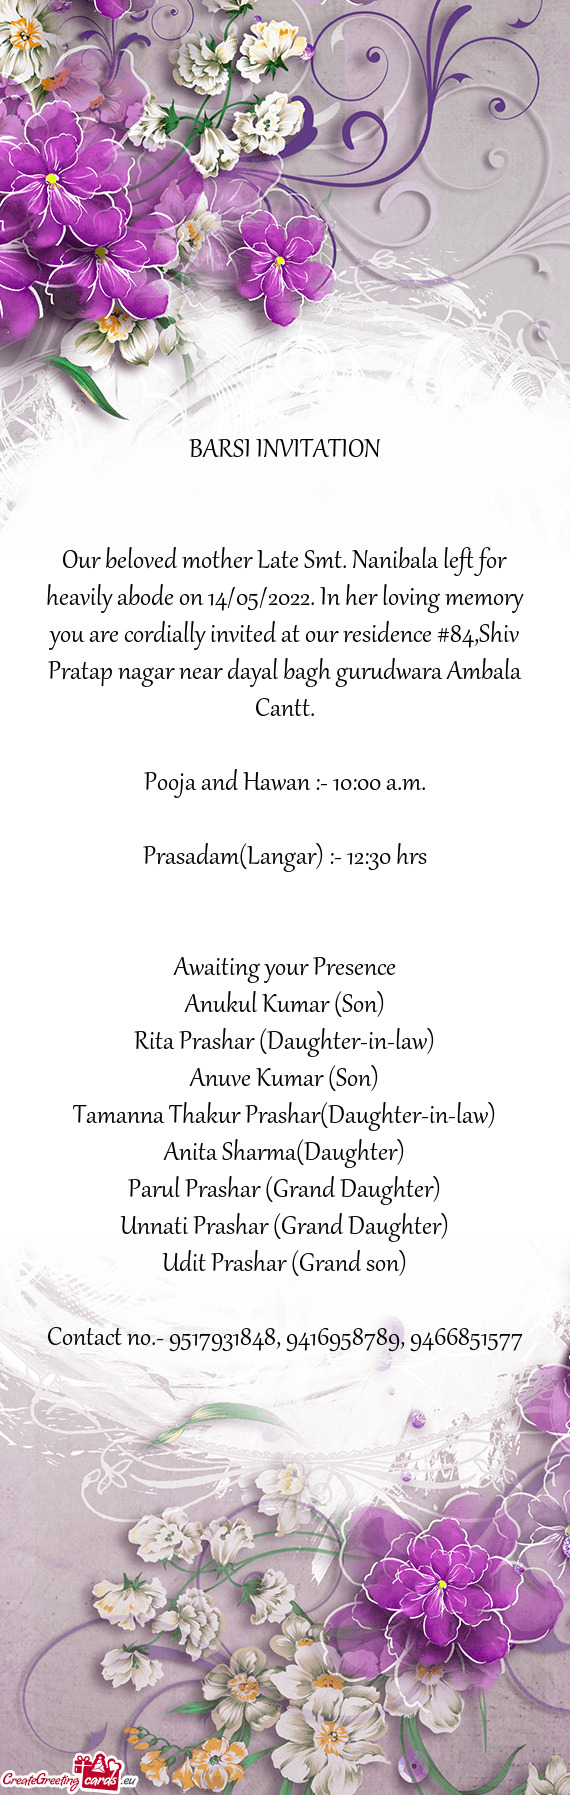 Are cordially invited at our residence #84,Shiv Pratap nagar near dayal bagh gurudwara Ambala Cantt